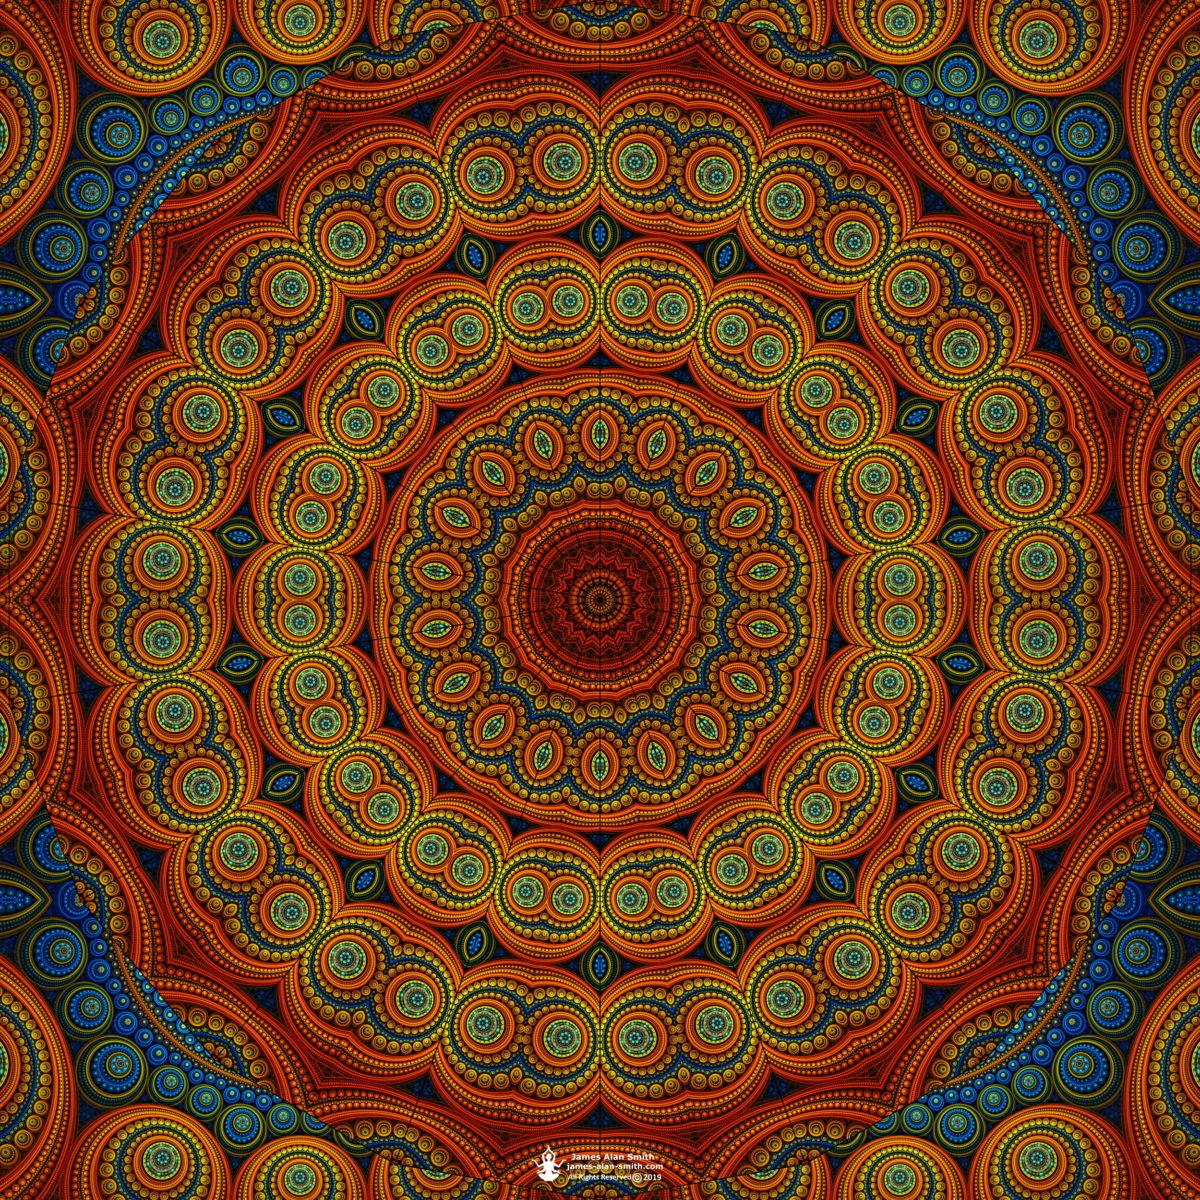 Other Realms Mandala: Artwork by James Alan Smith